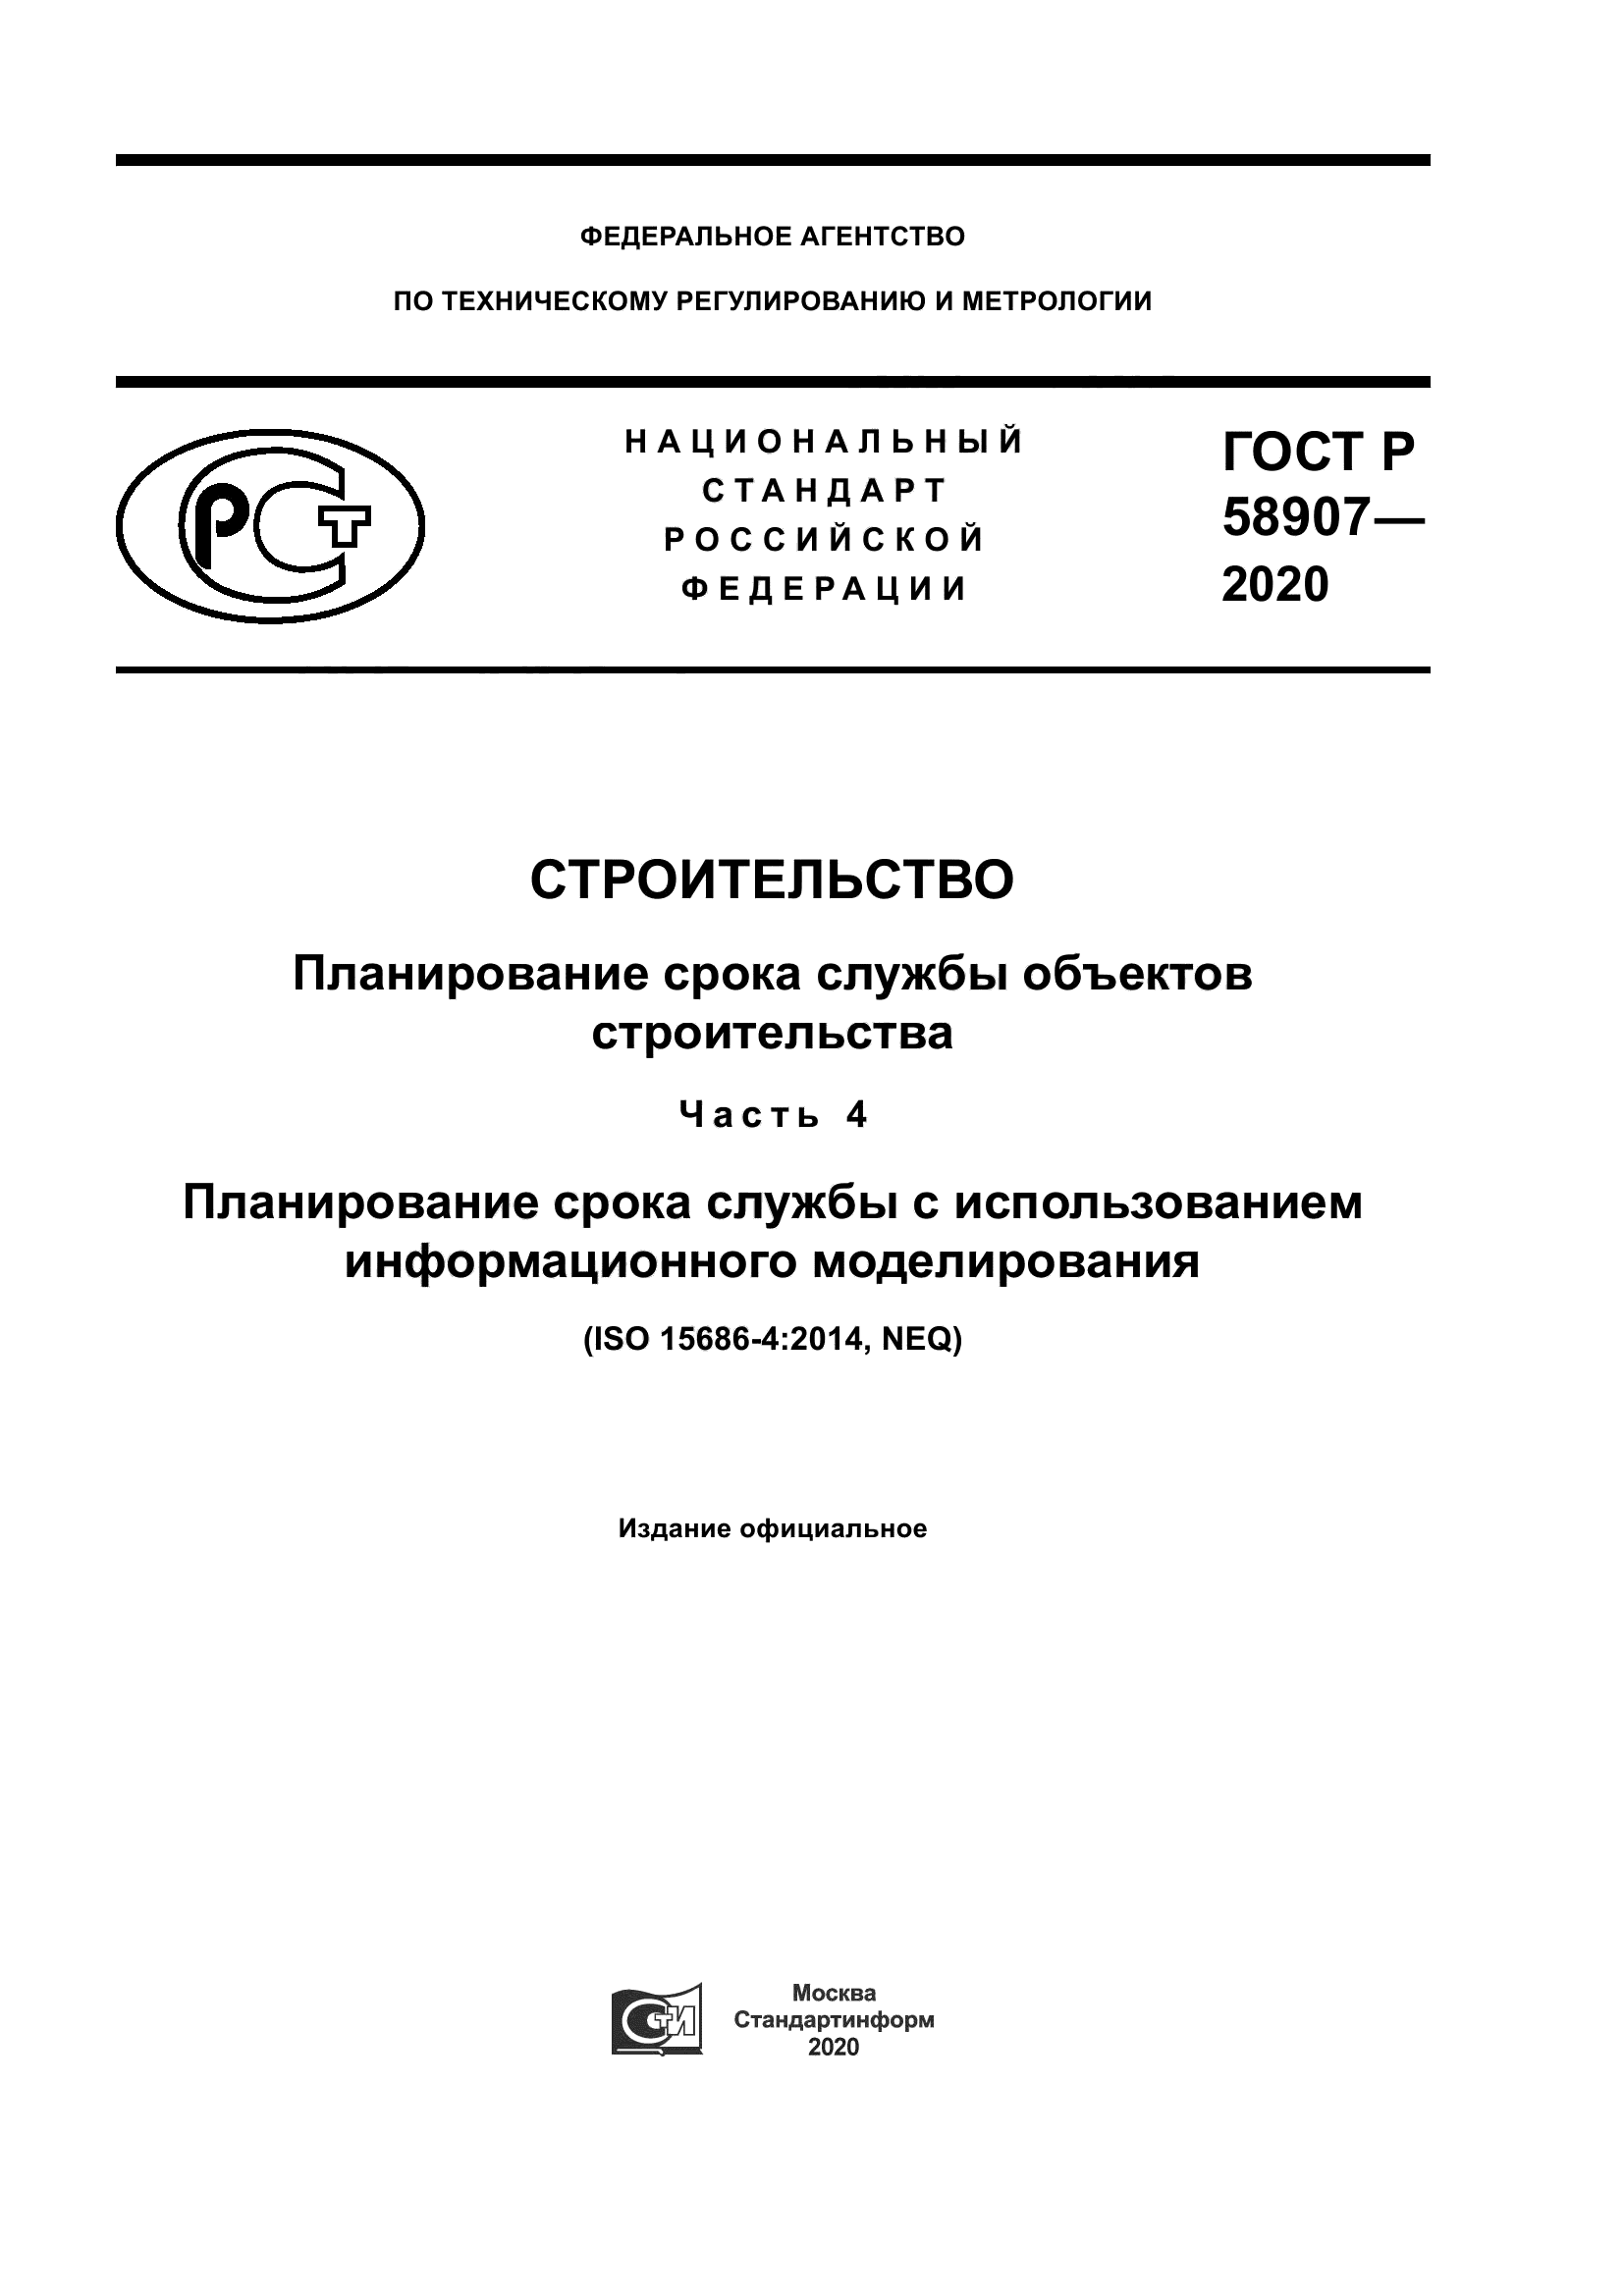 ГОСТ Р 58907-2020